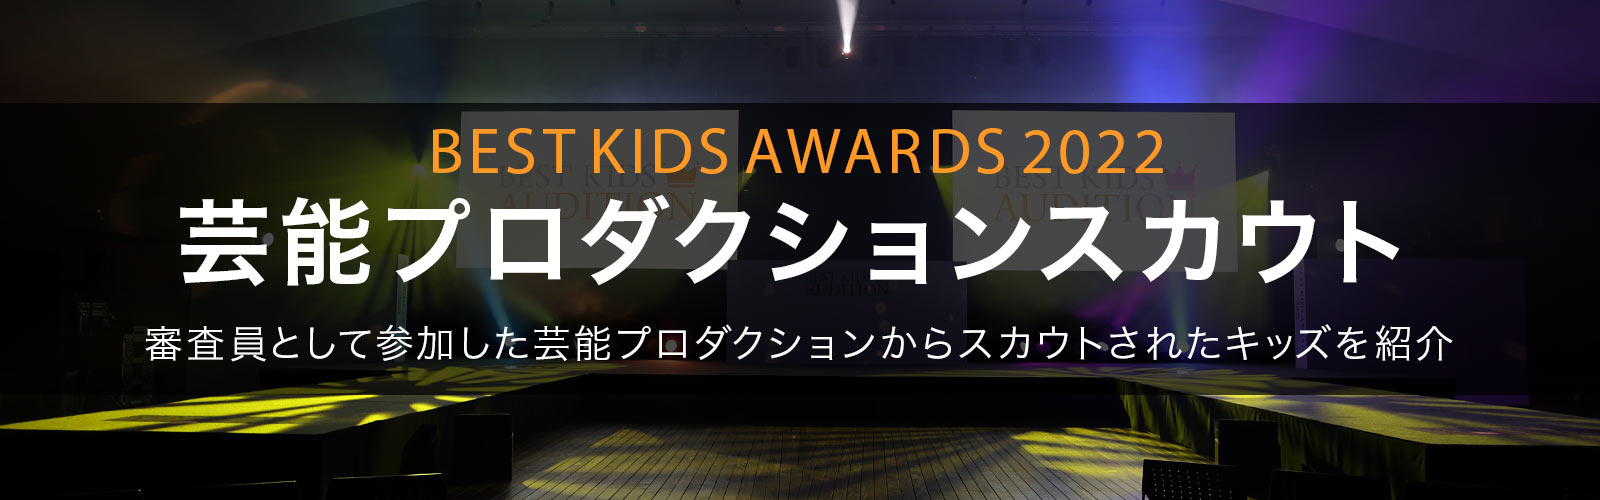 BEST KIDS AWARDS 2022 芸能プロダクションスカウト